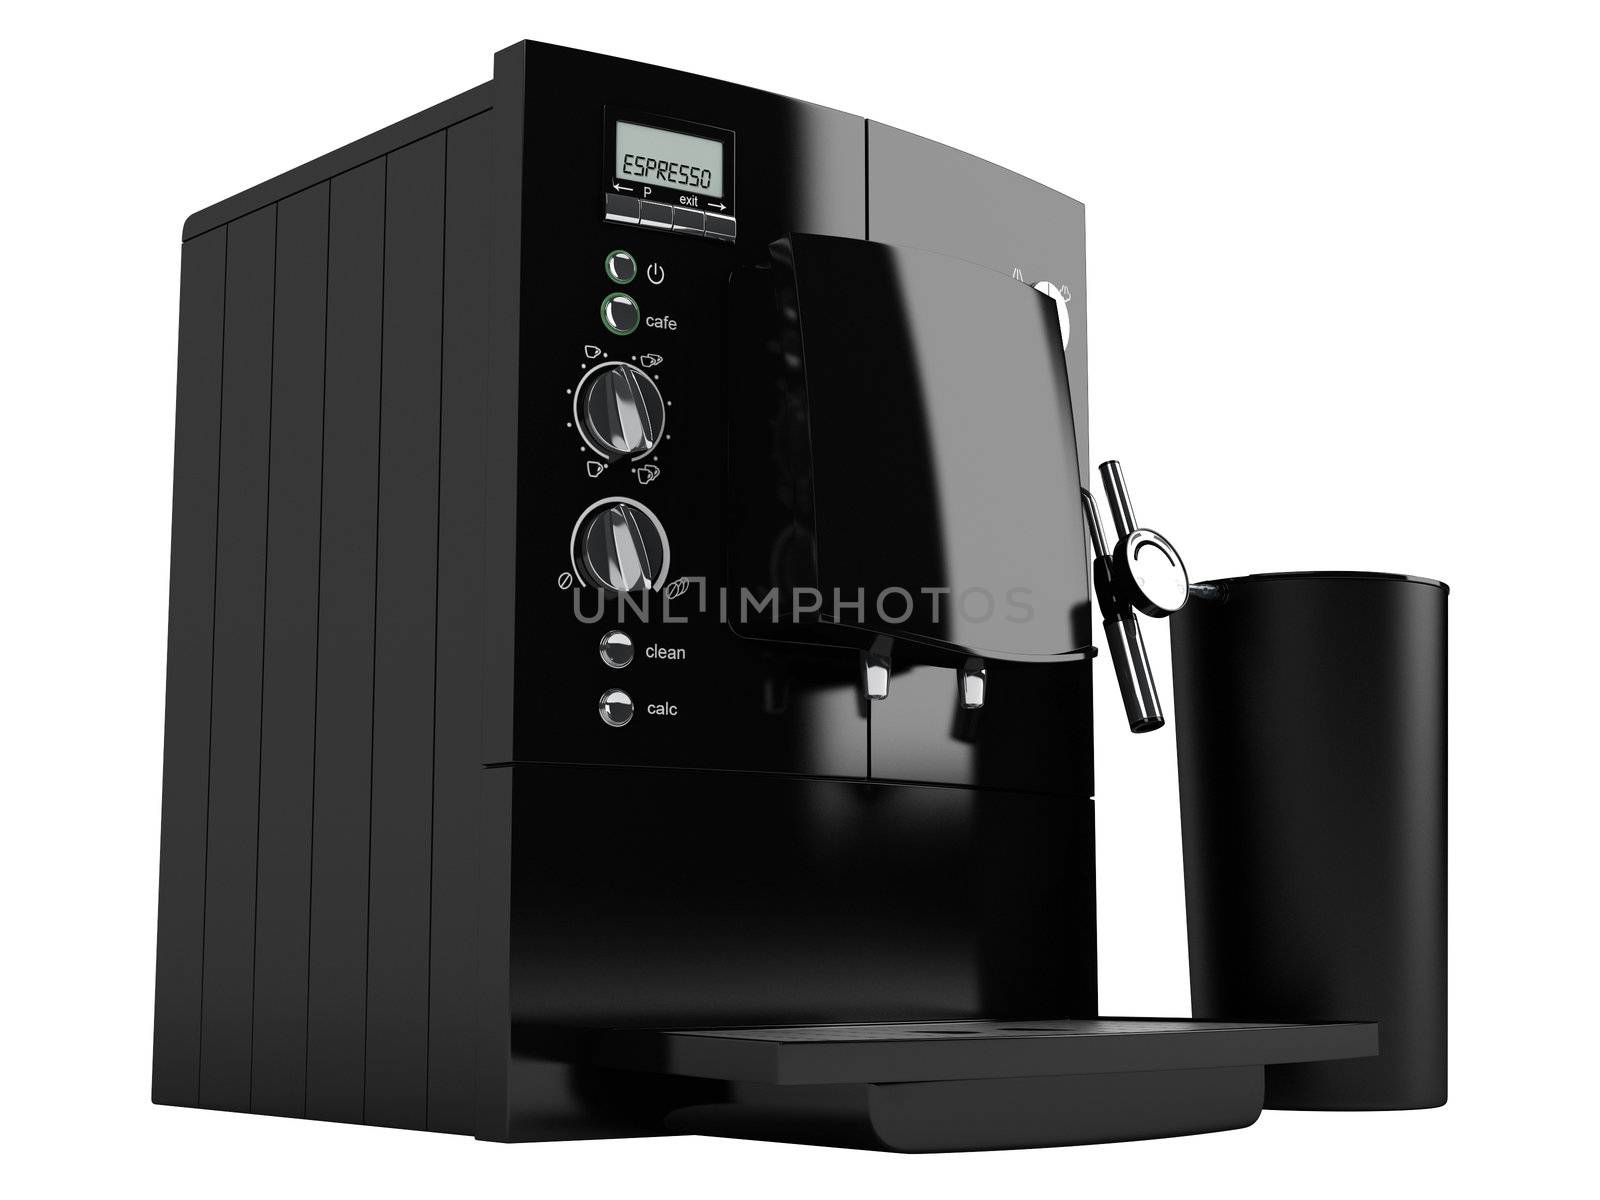 Black coffee machine isolated on white background